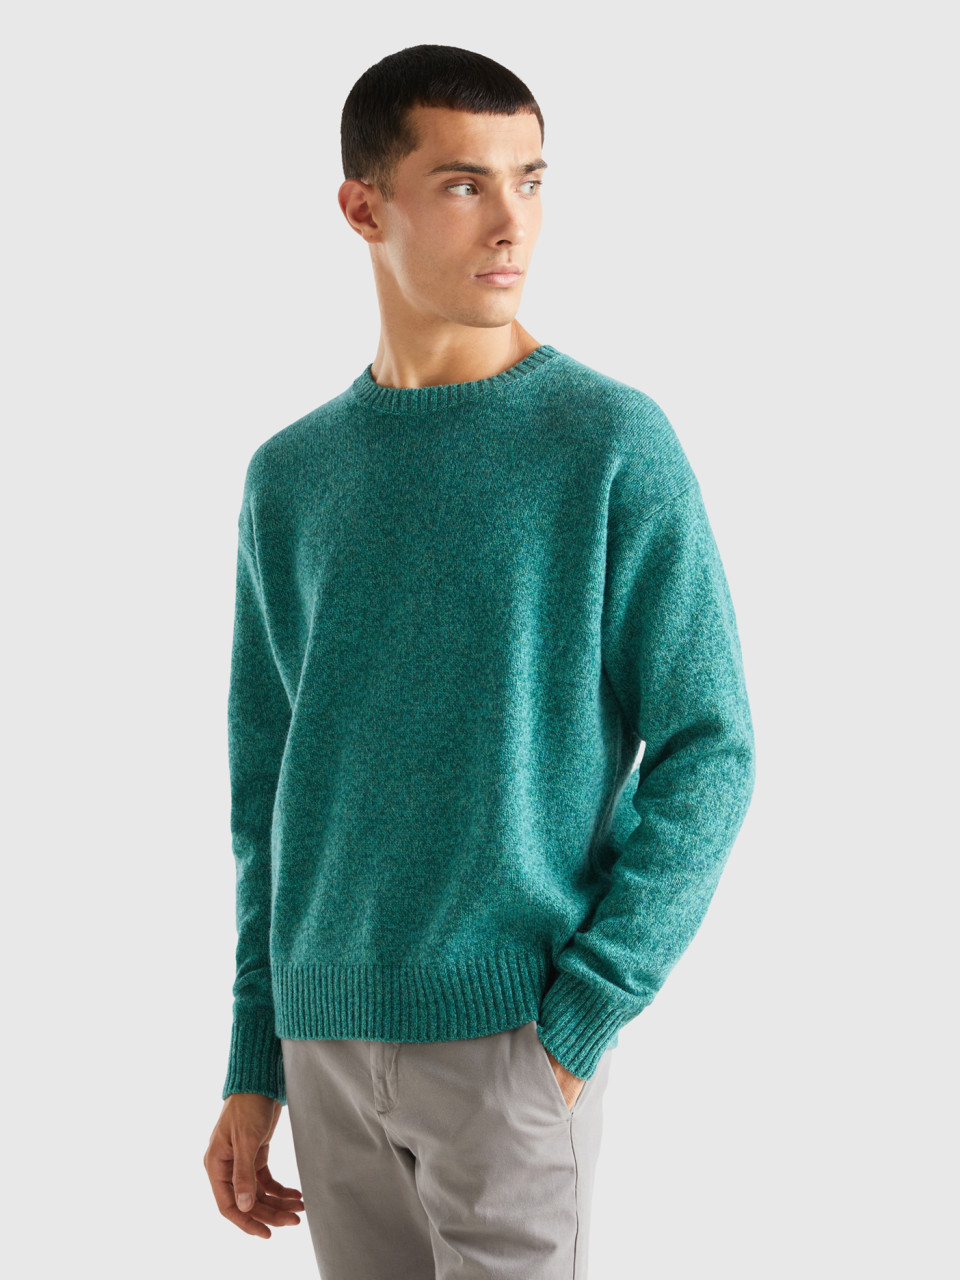 Benetton, Crew Neck Sweater In Pure Shetland Wool, Teal, Men